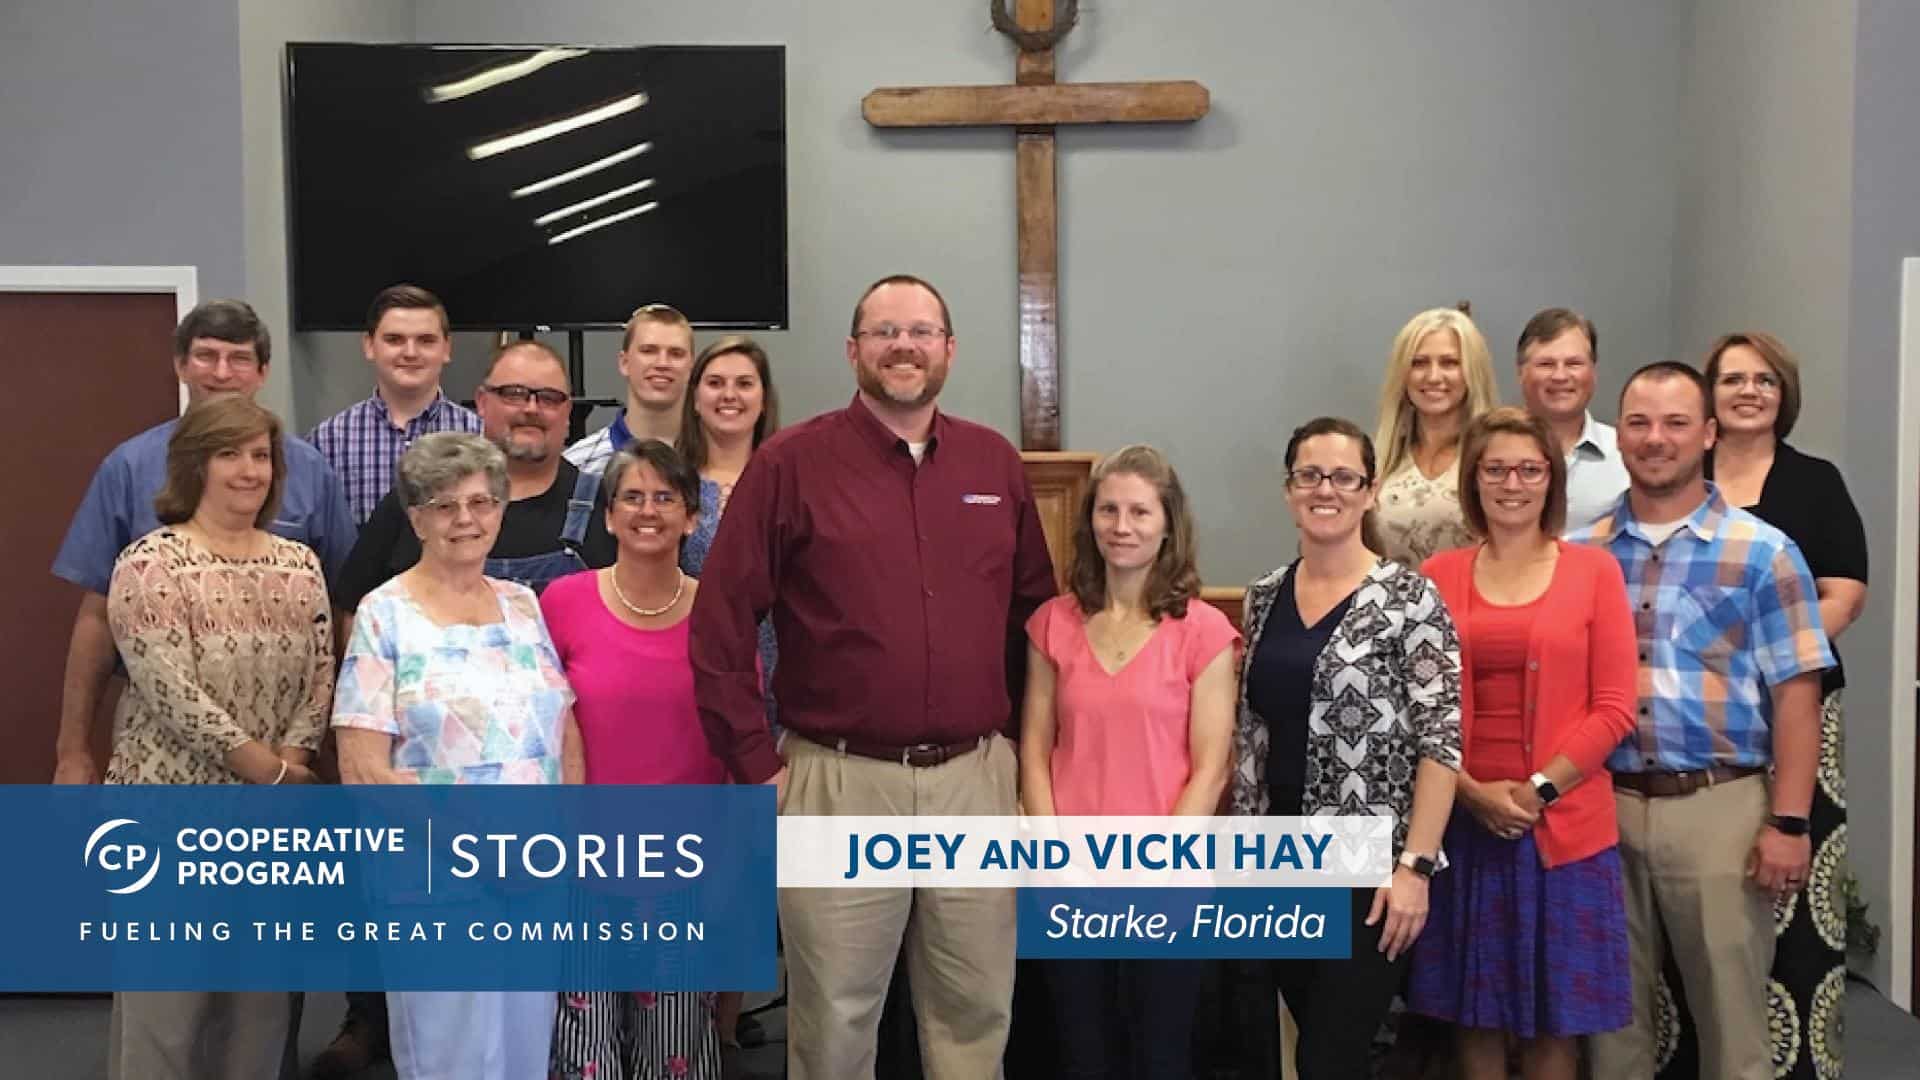 Joey and Vicki Hay and church family